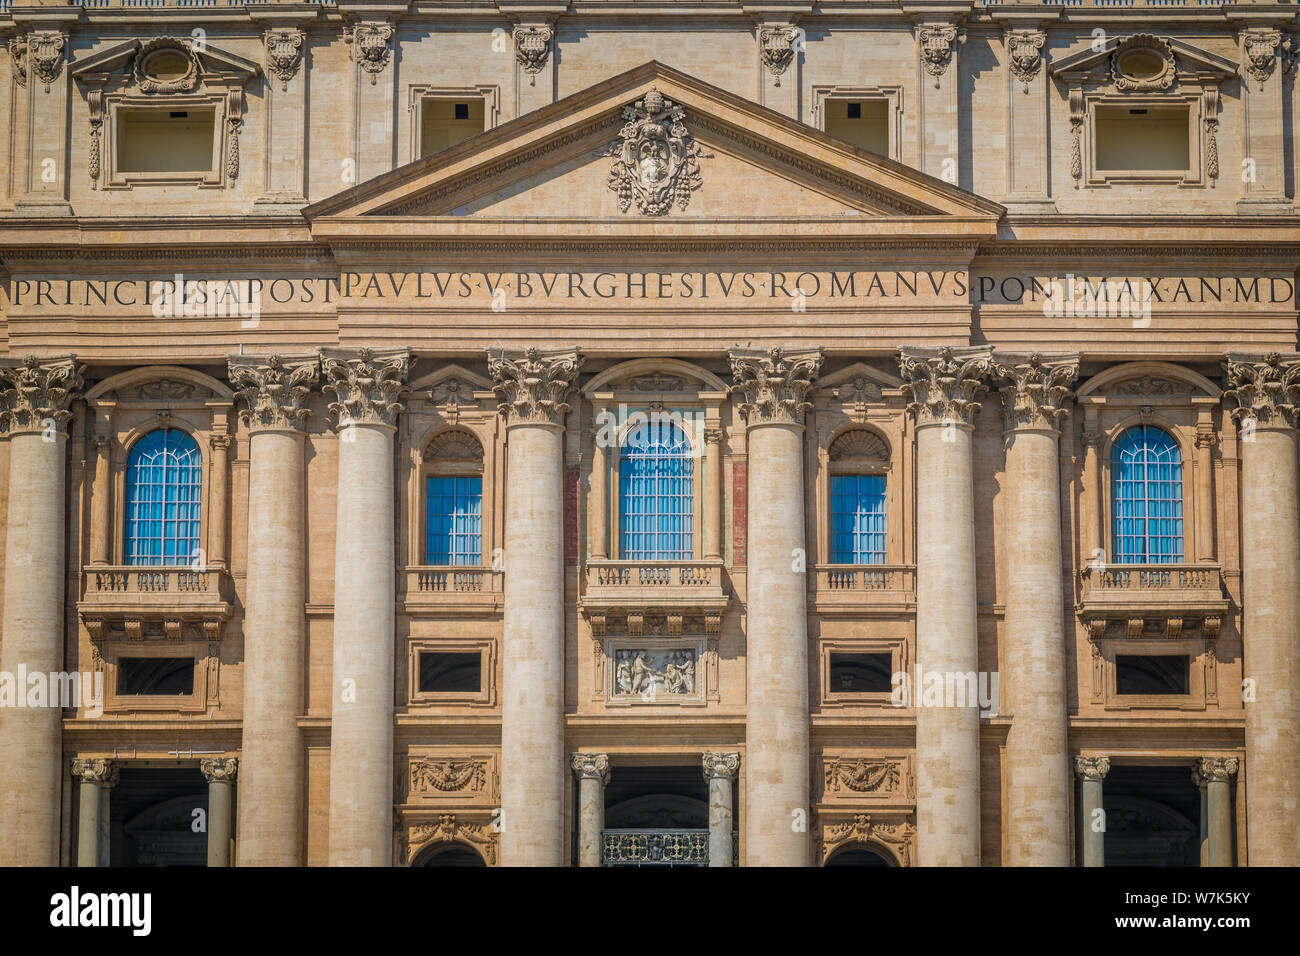 St. Peter's Basilica Facade in the Vatican Stock Photo